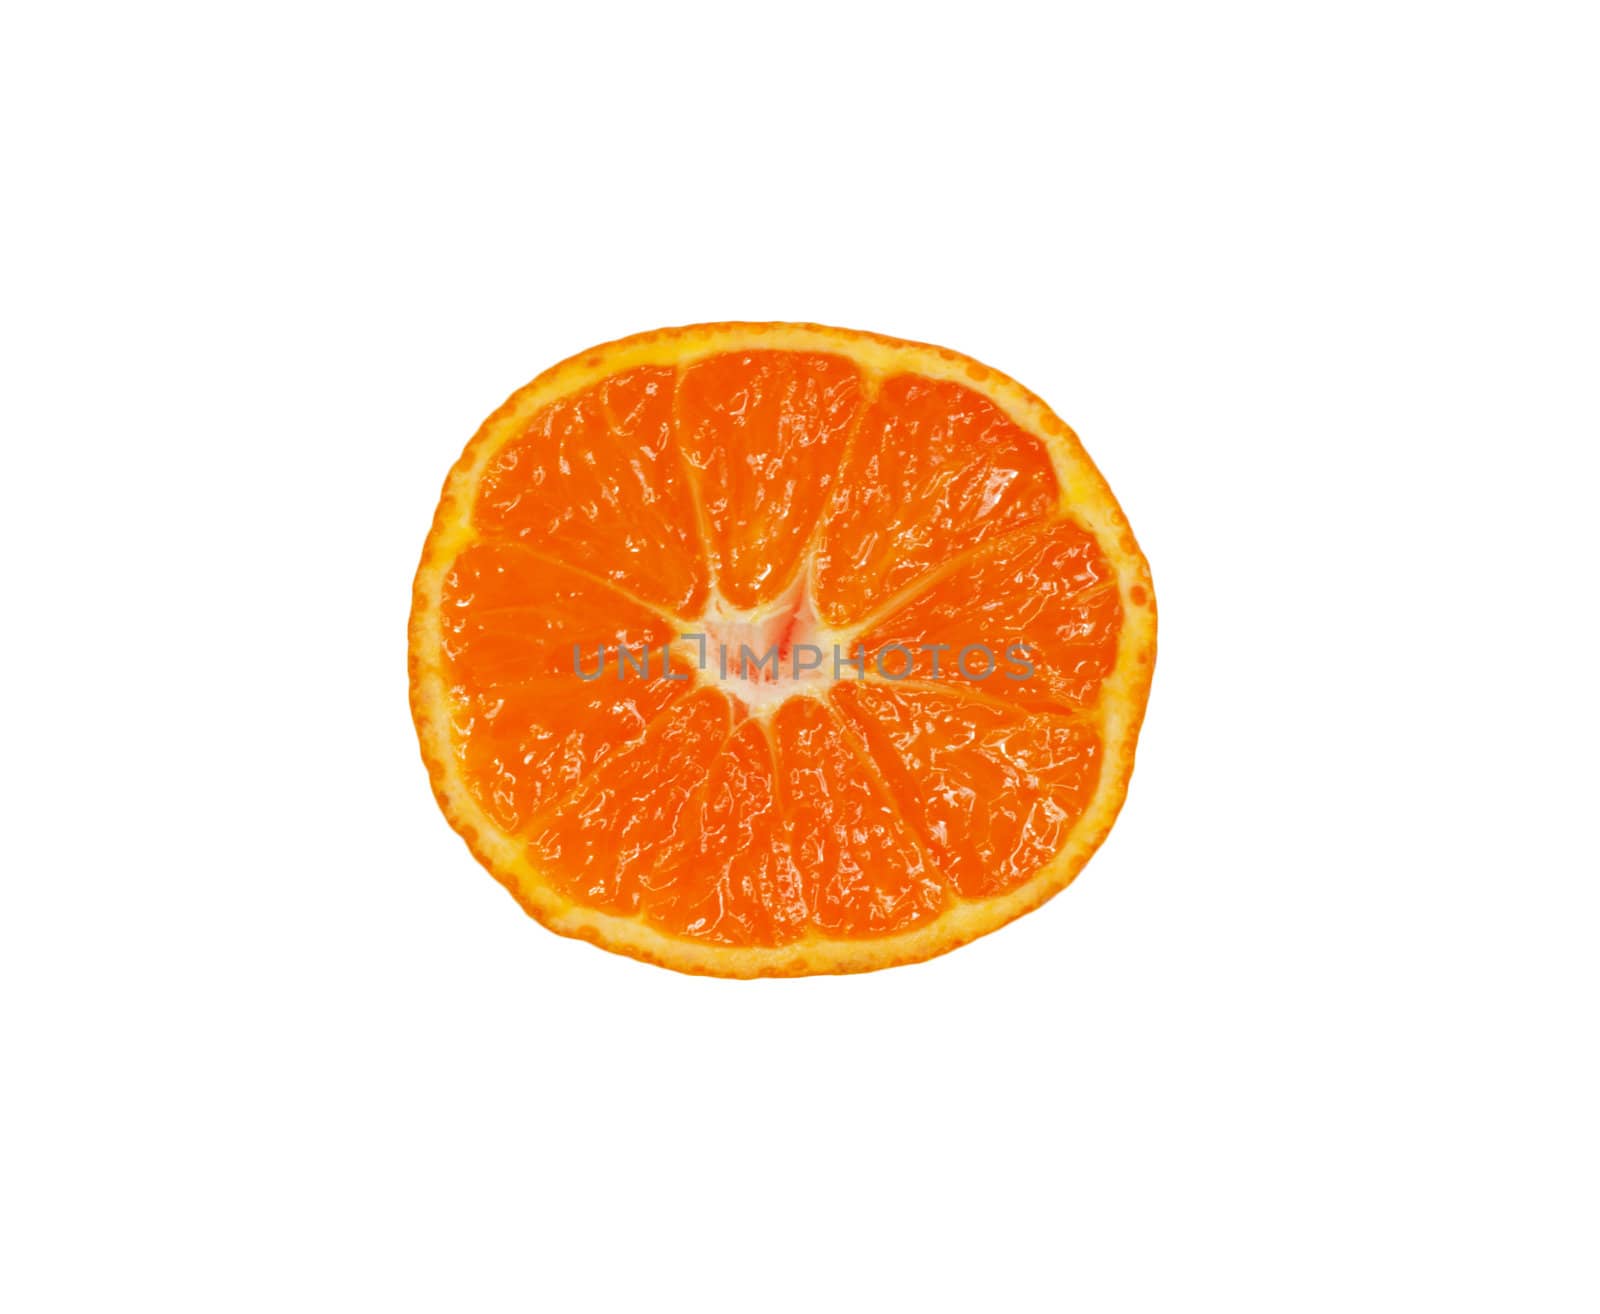 cut tangerine on white background